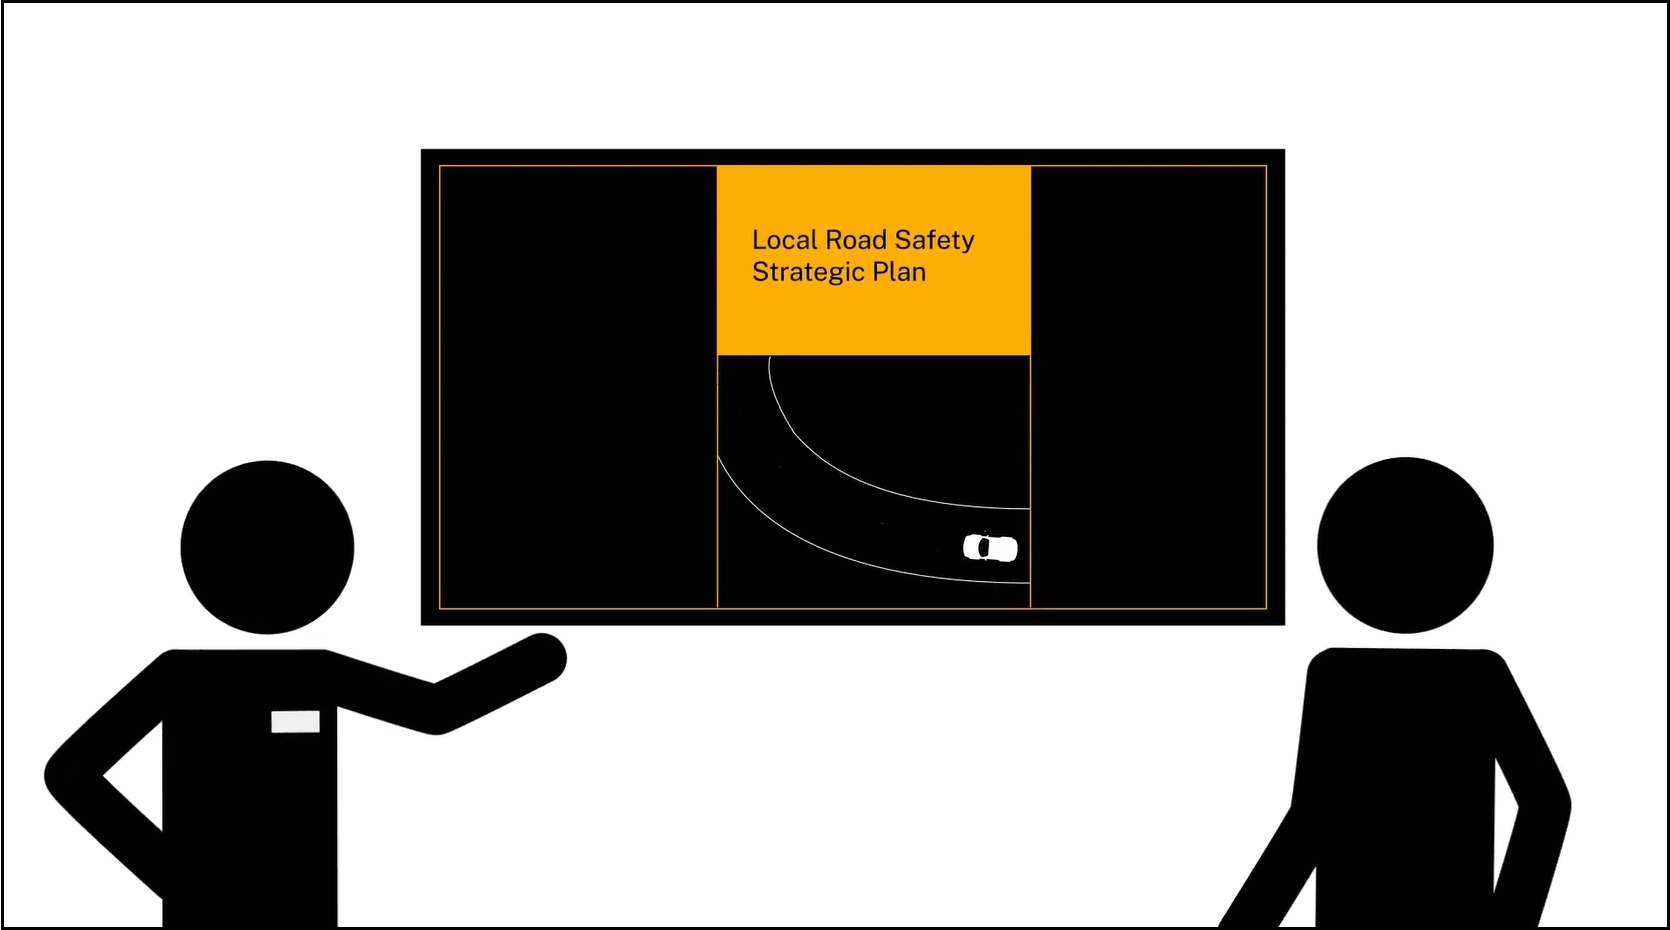 Local Road Safety Strategic Plan